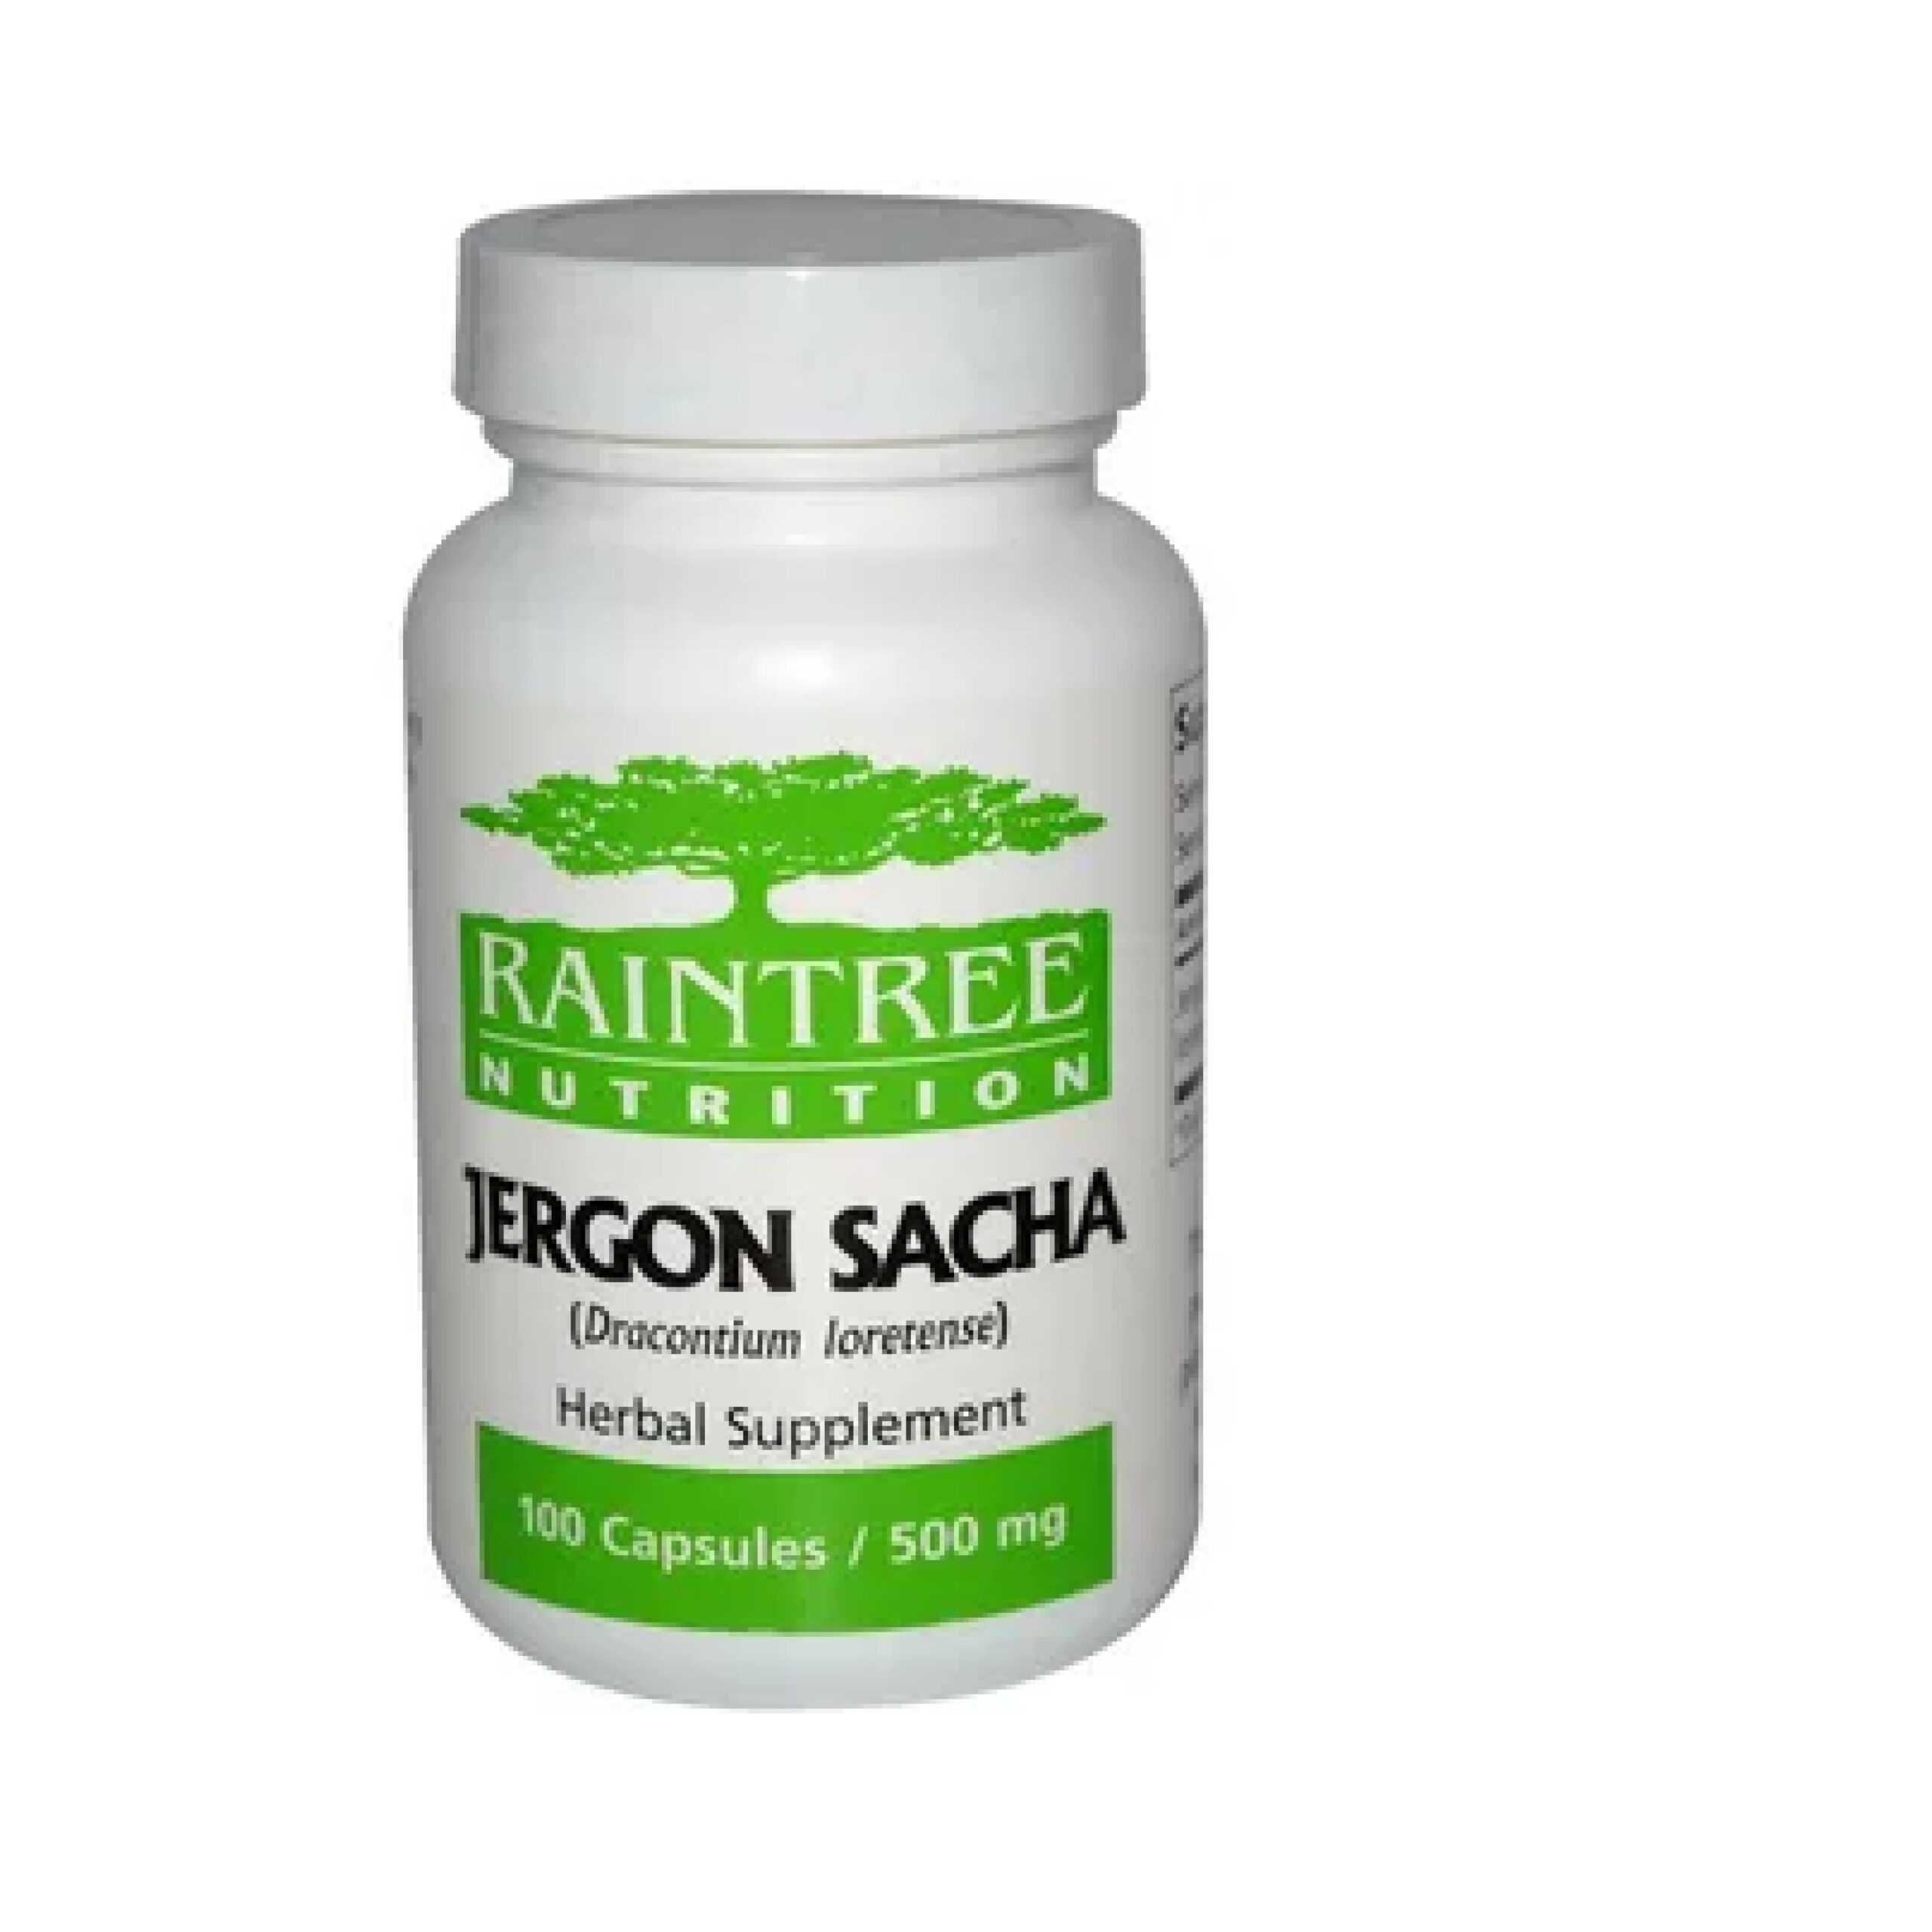 Benefits of Jergon Sacha Supplements